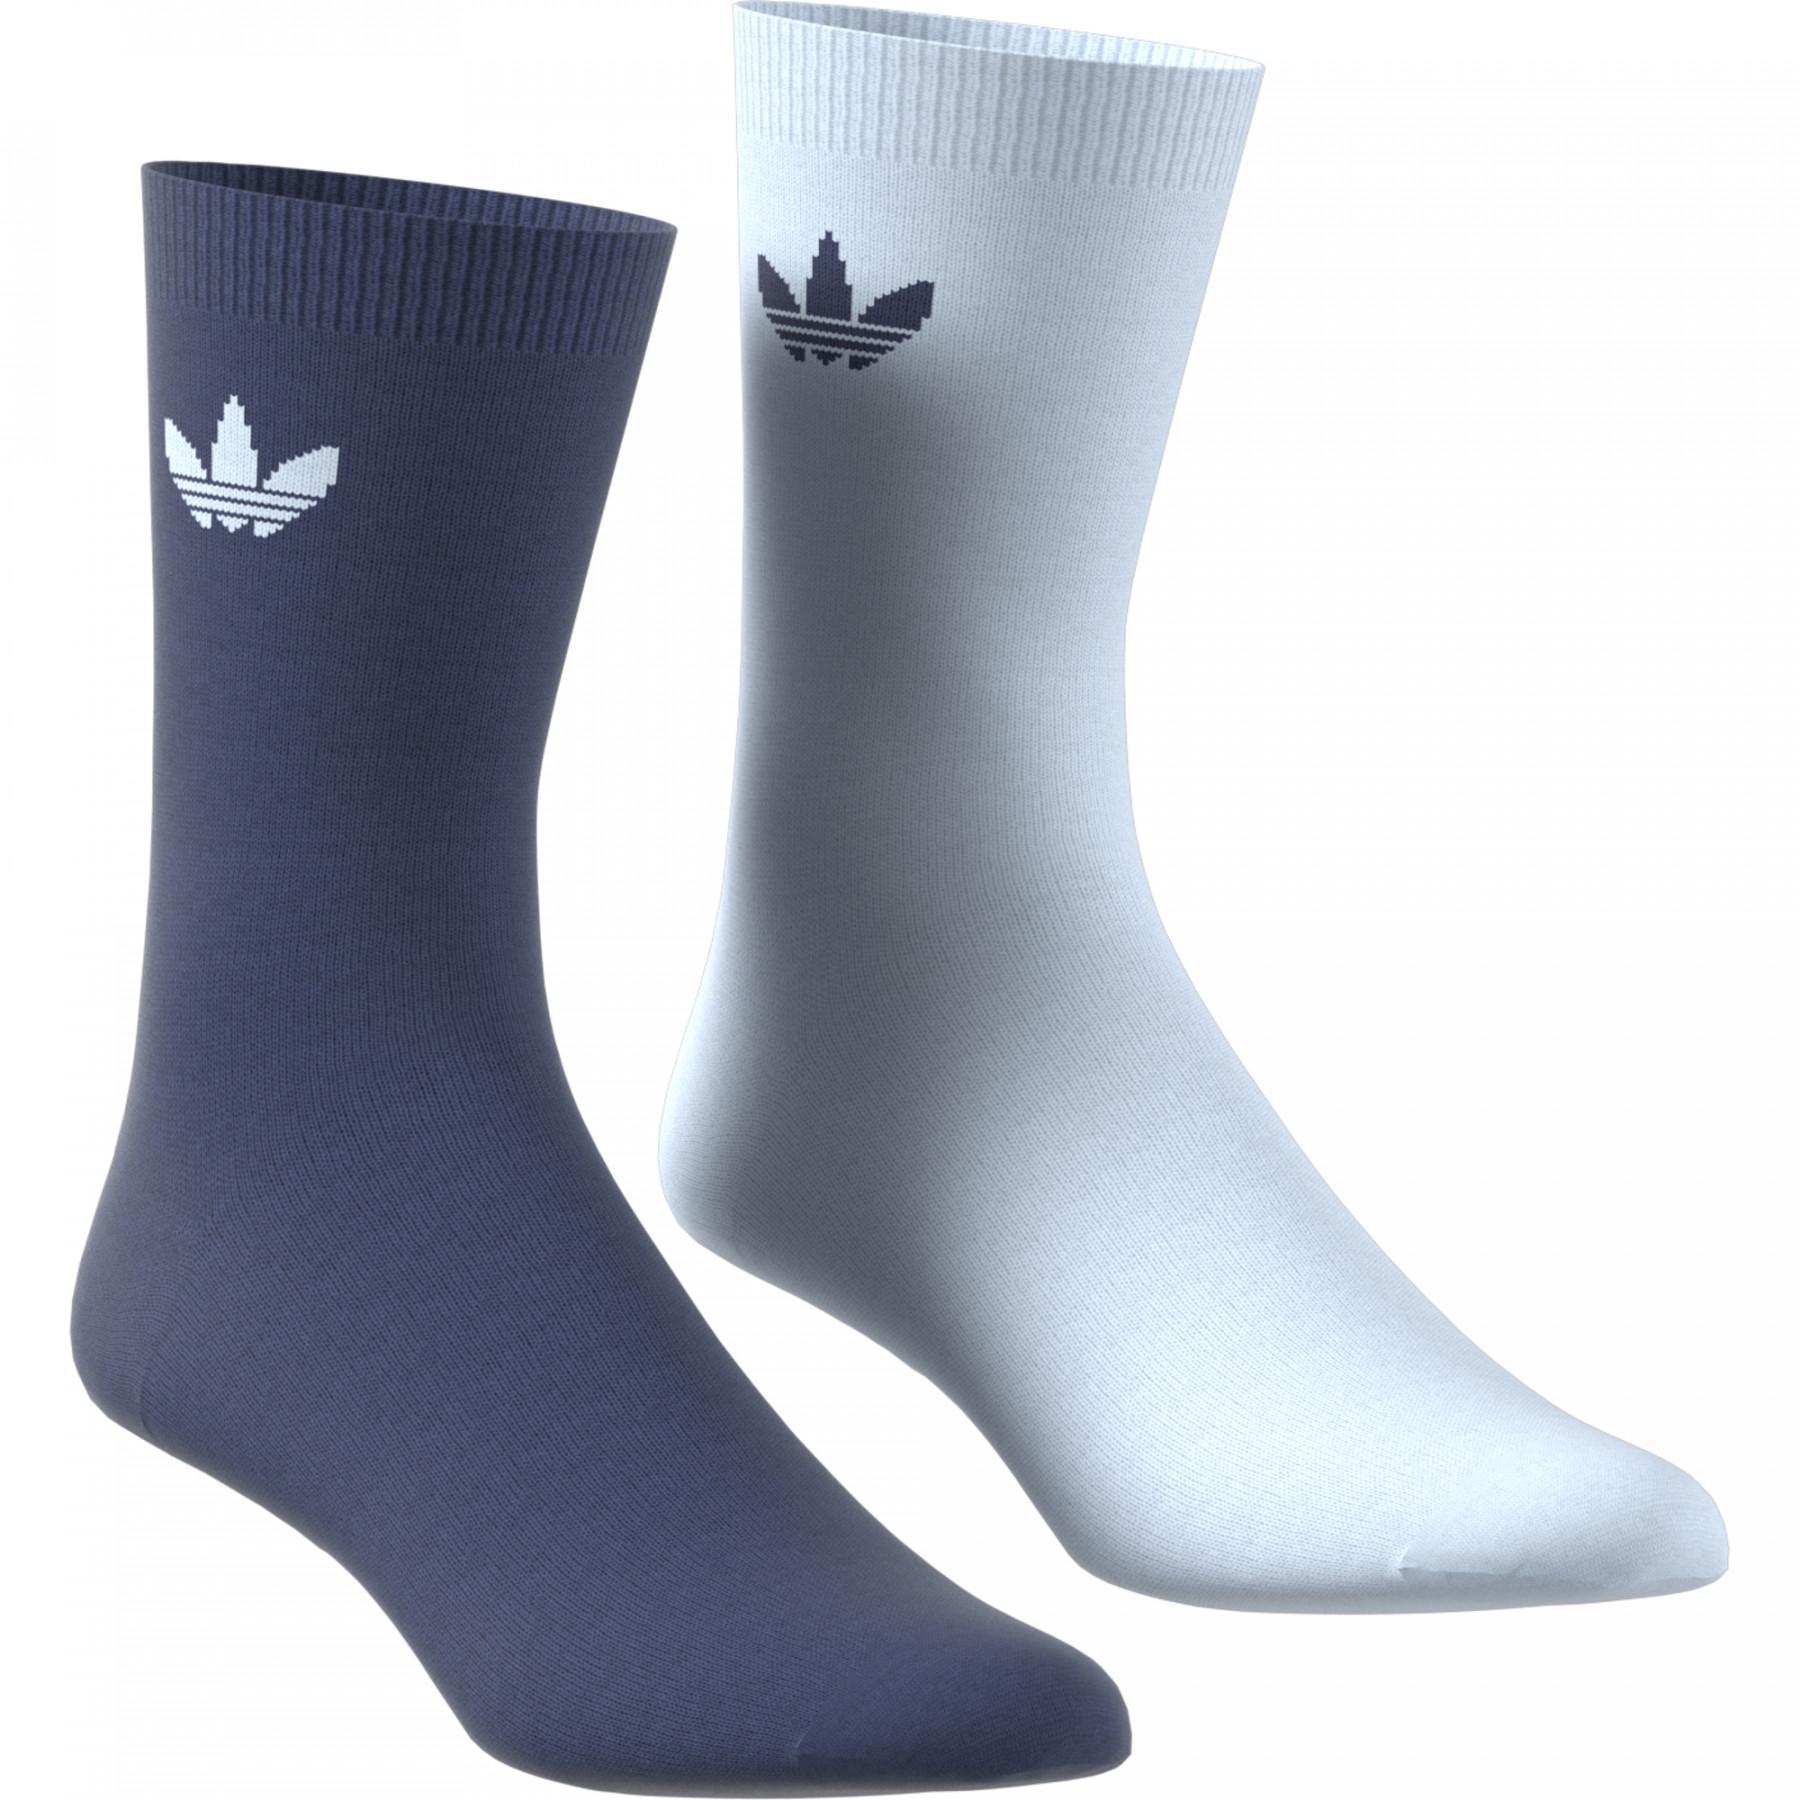 Socks adidas originals mi-mollet Trefoil Thin (2 paires)